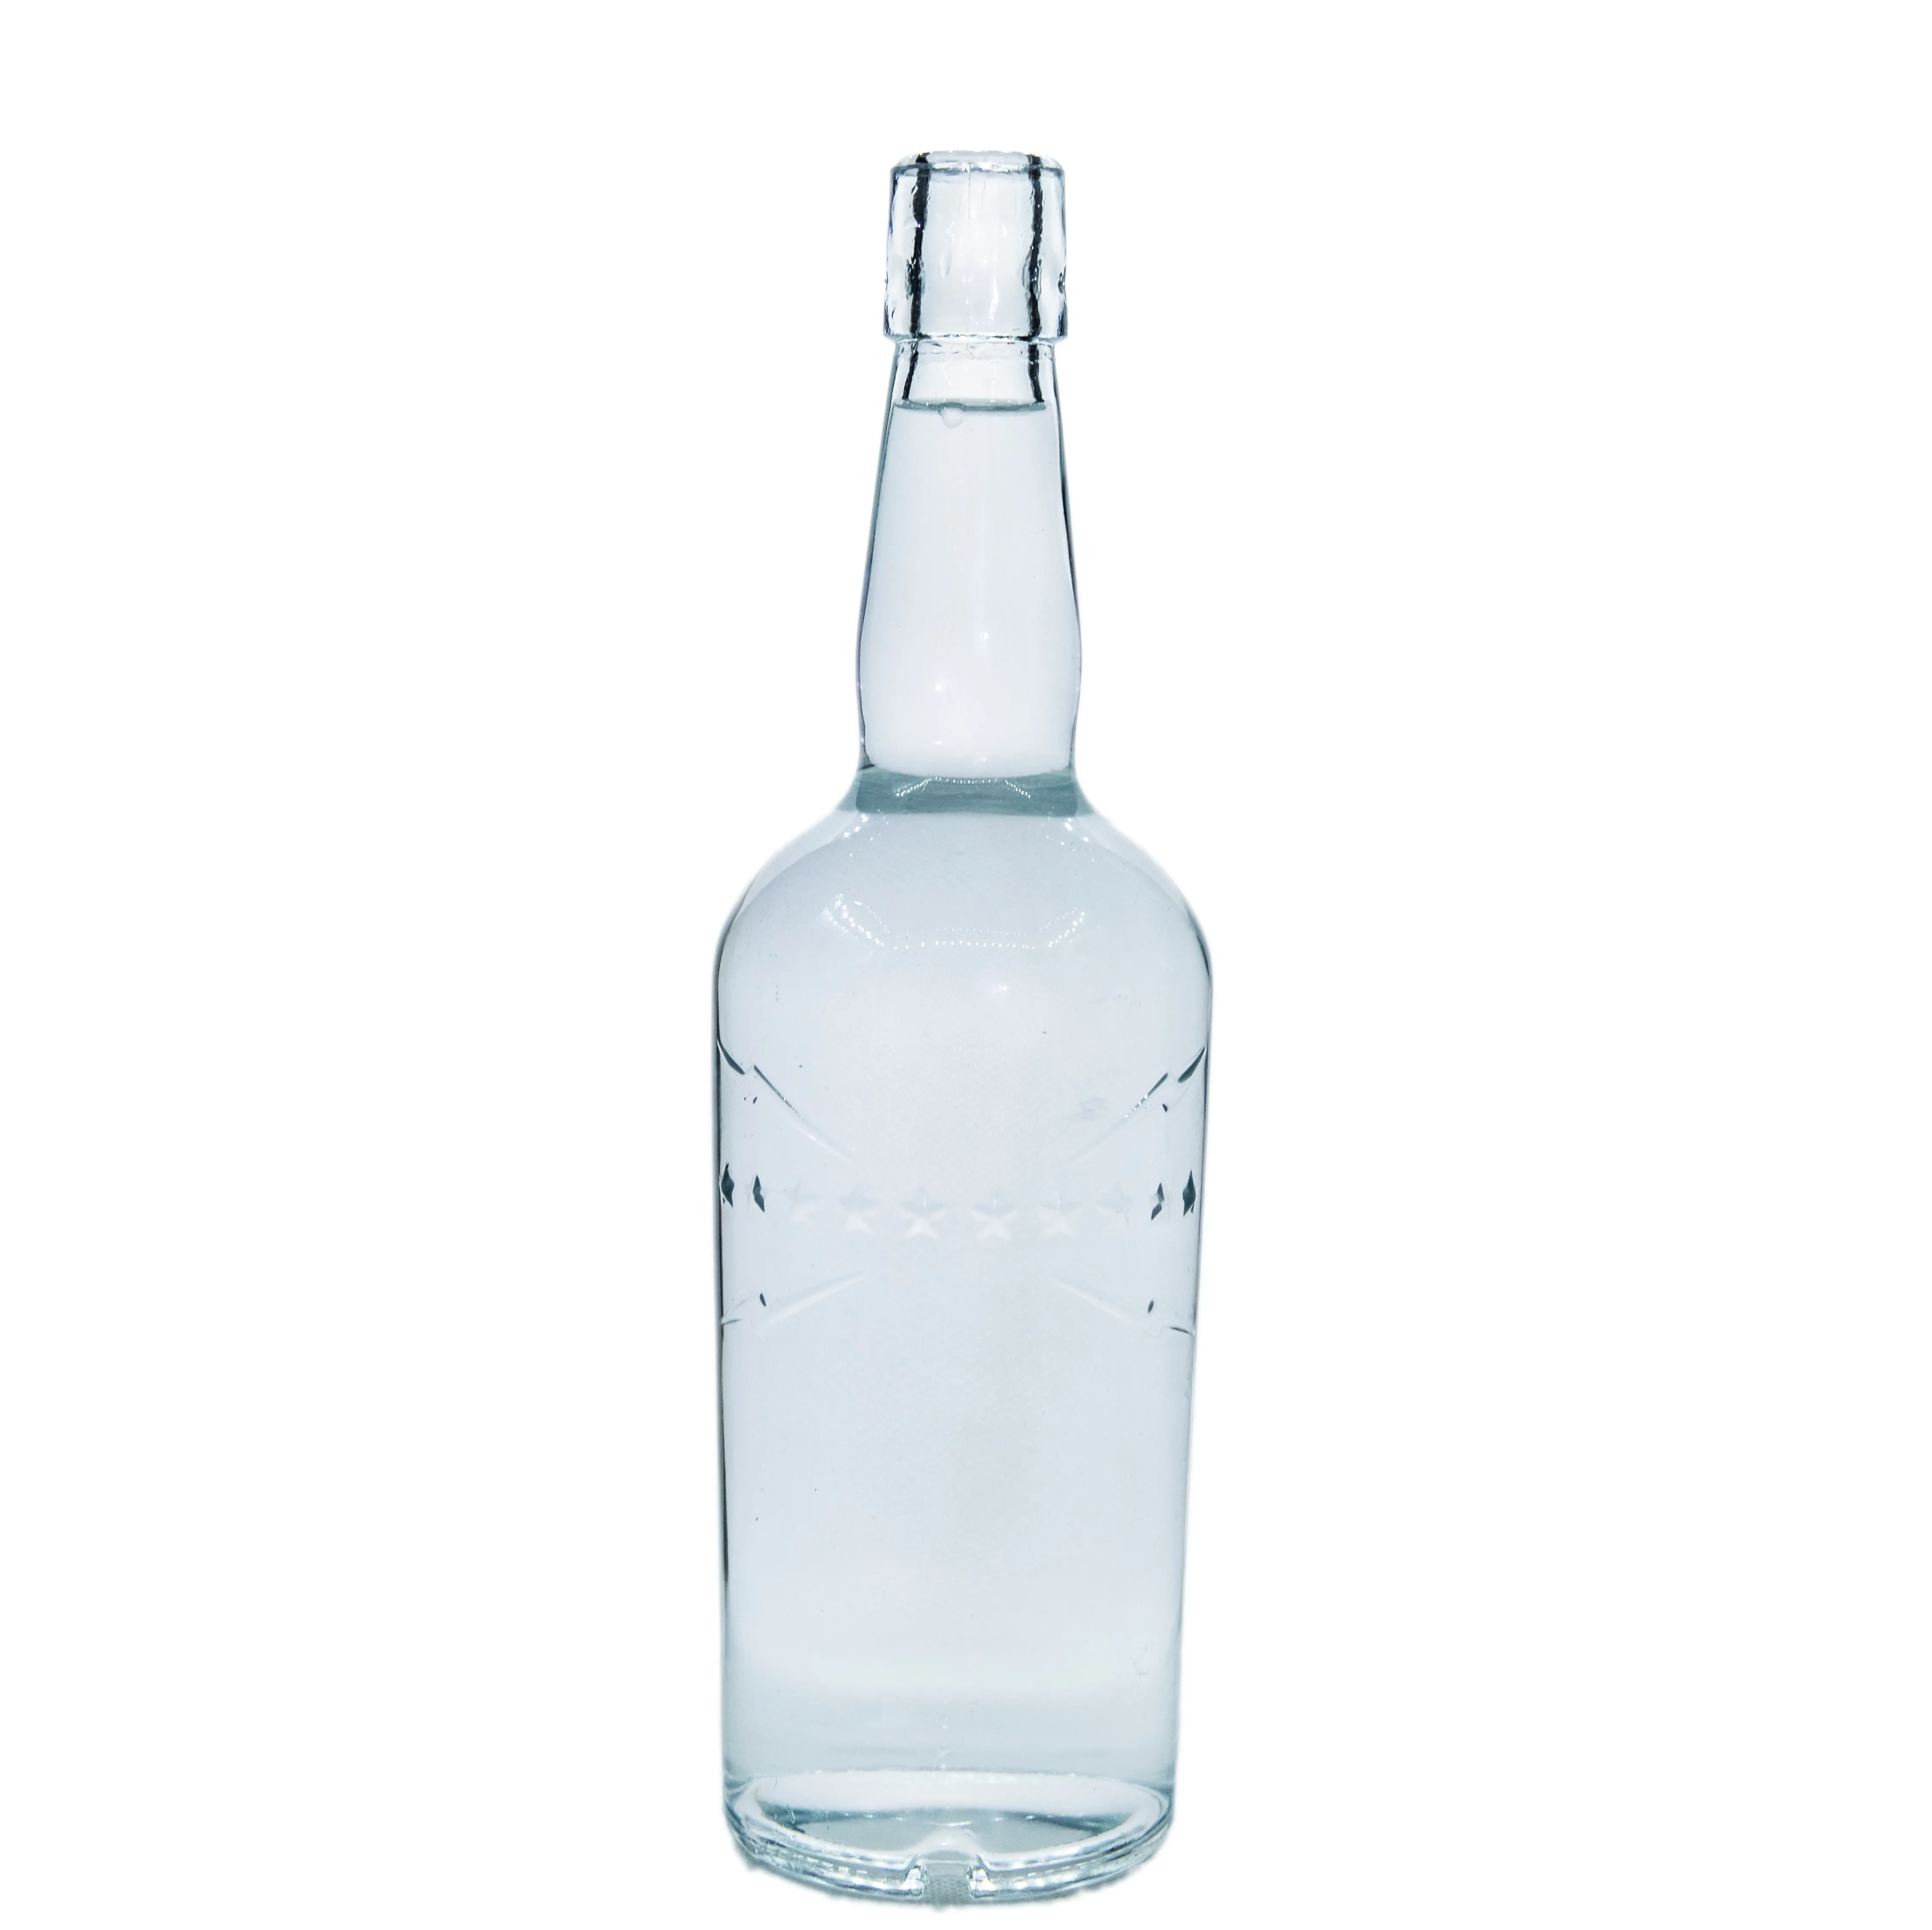 अद्वितीय स्पष्ट कांच की बोतल खाली व्हिस्की बोतल वोदका 500 मिलीलीटर 1000 कोर्क टेक्विला तरल बोतल के साथ